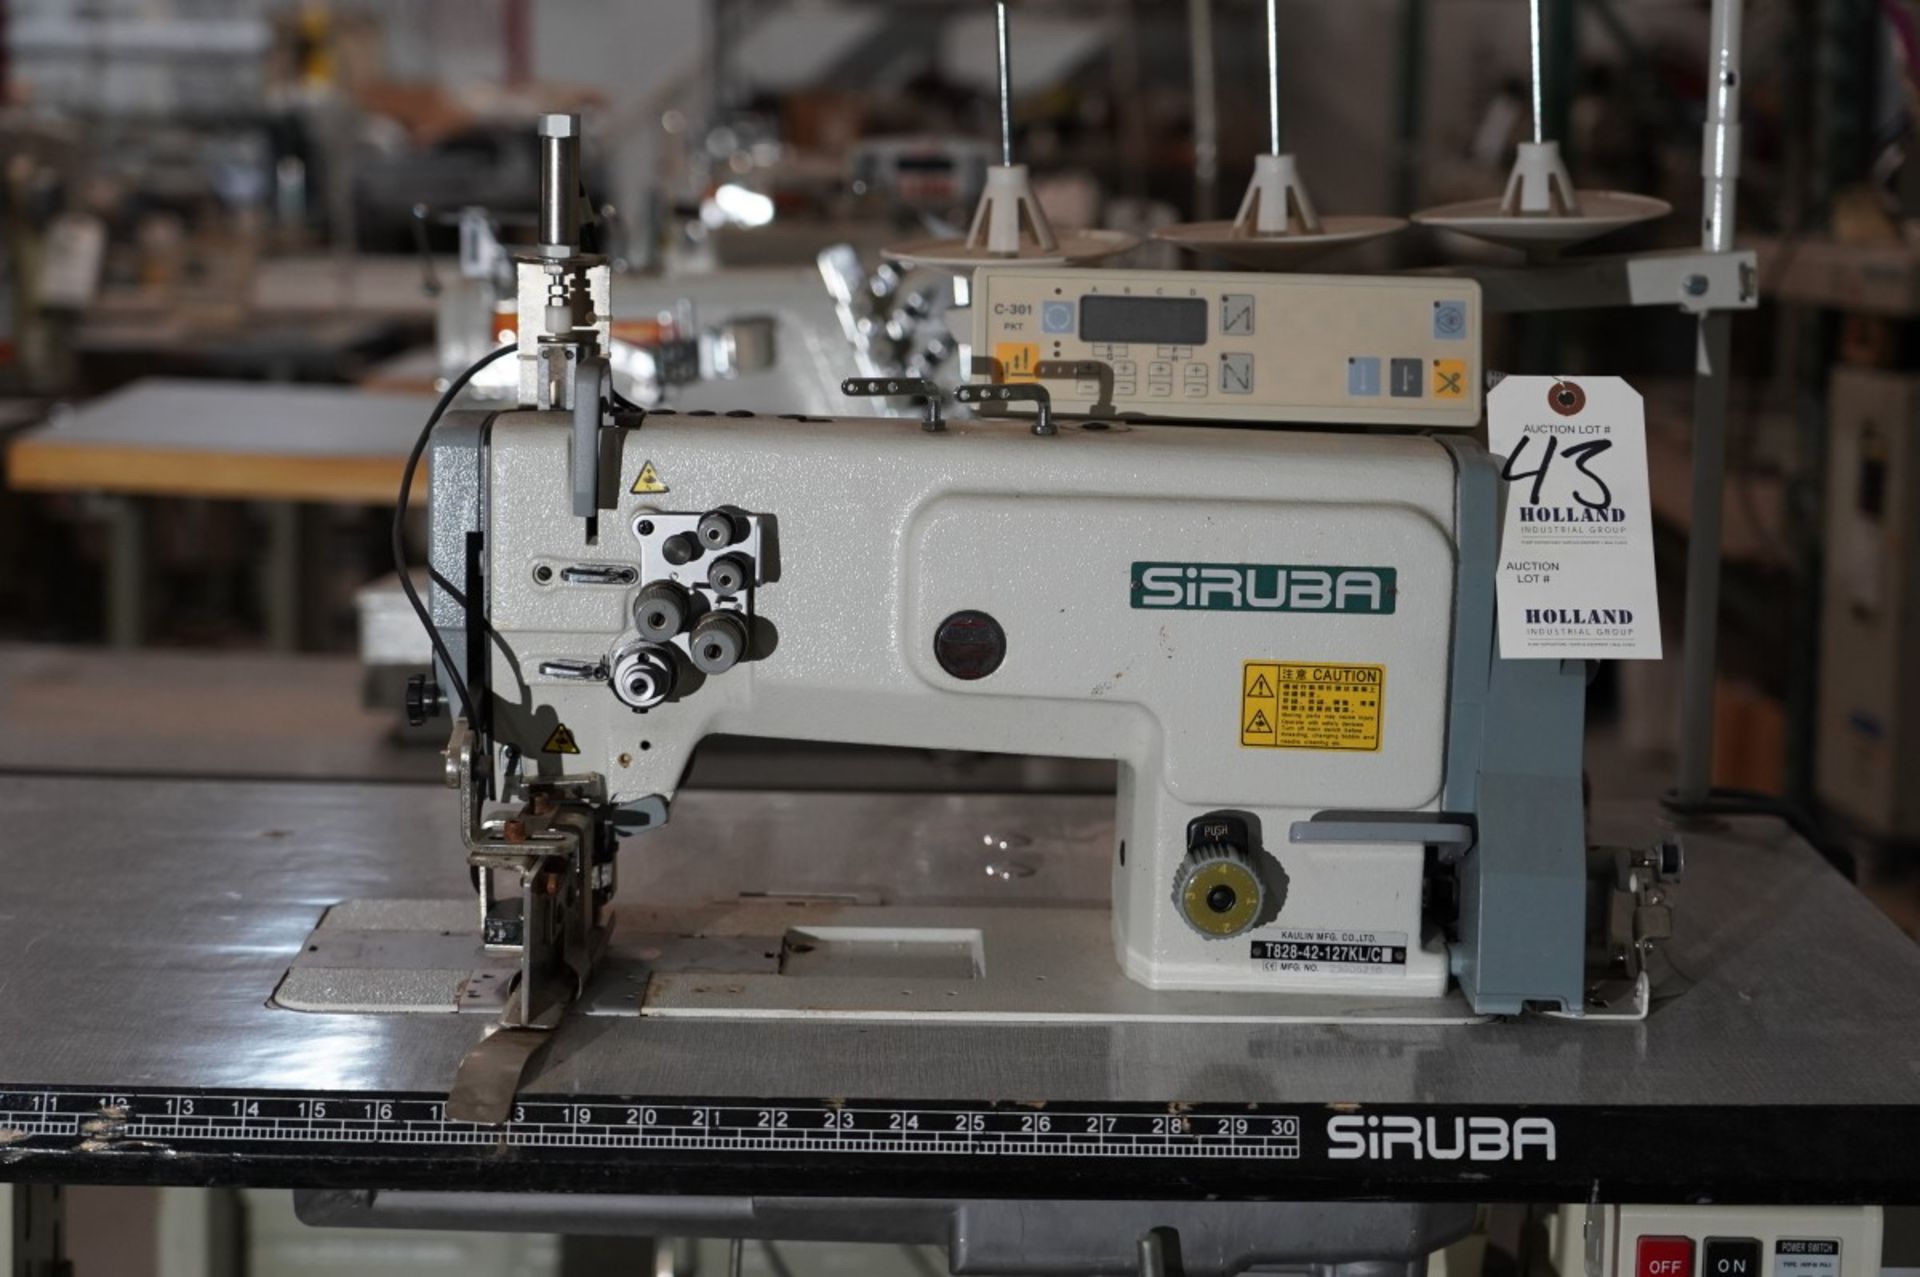 Siruba Overlock Sewing Machine Model T828-42-127KL/C S/N 23605216, Adjustable Speed, Number of Ne